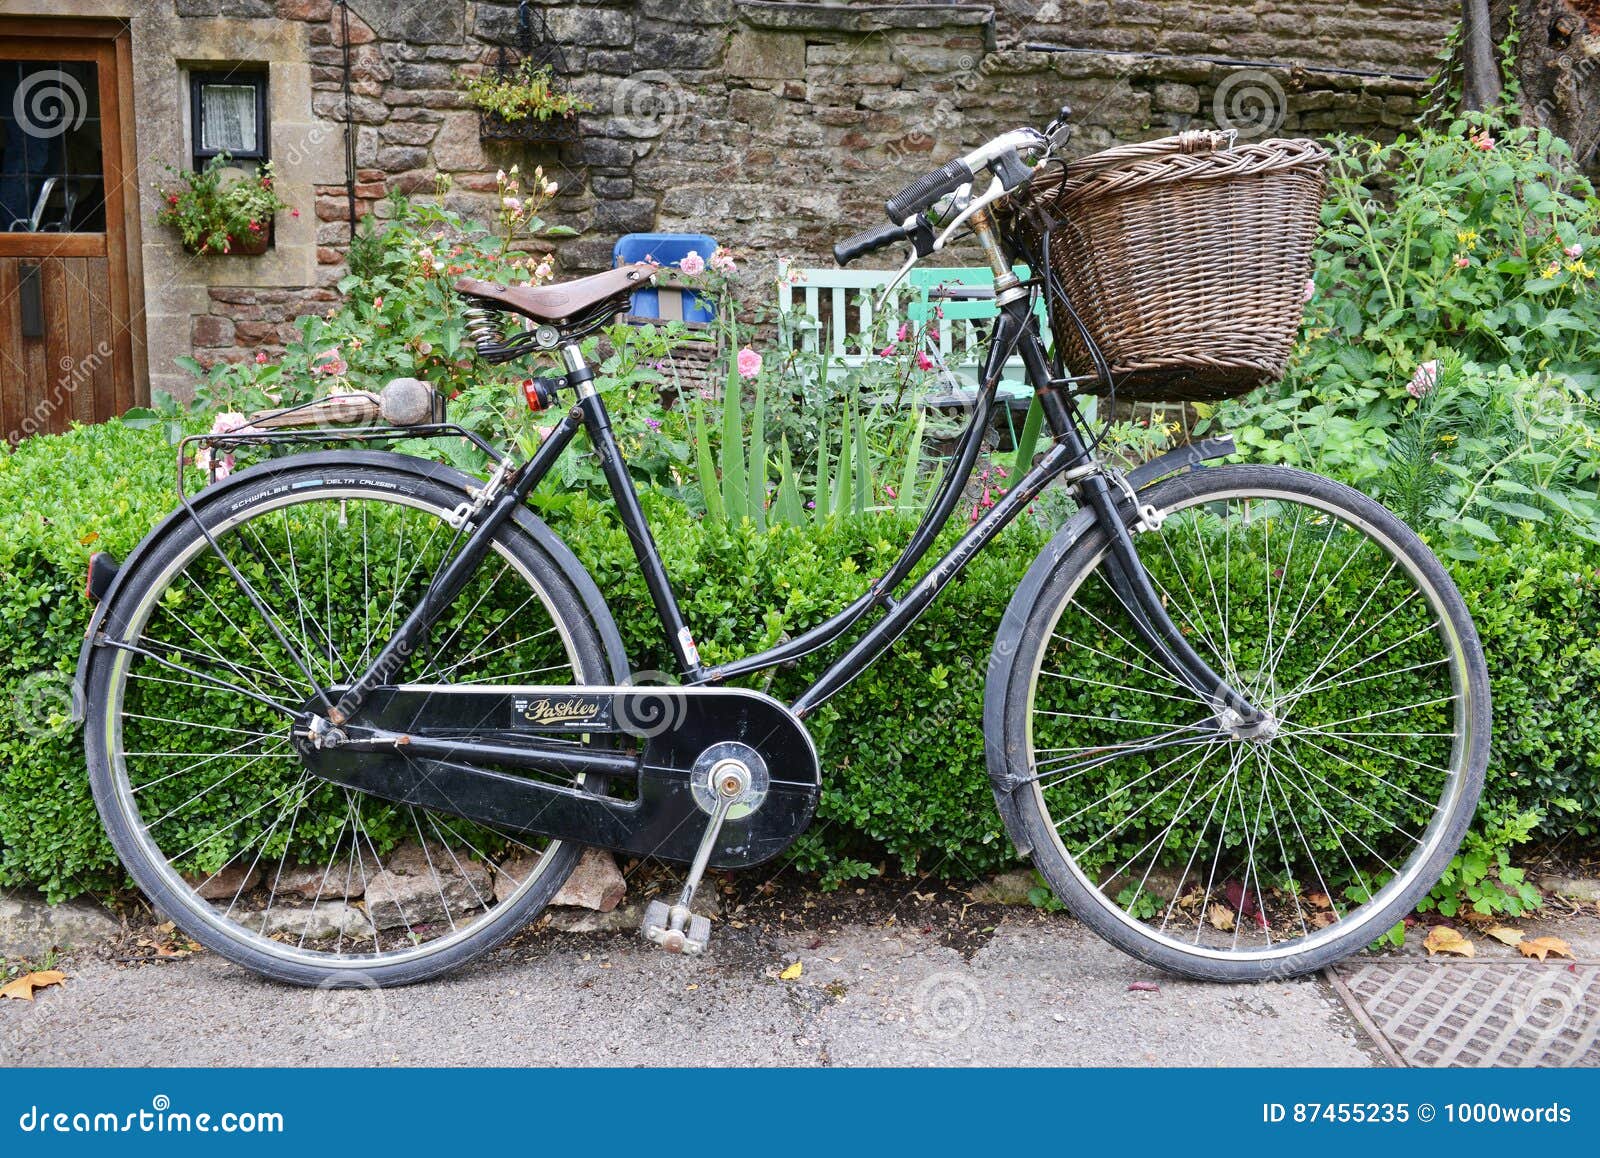 vintage pashley bike